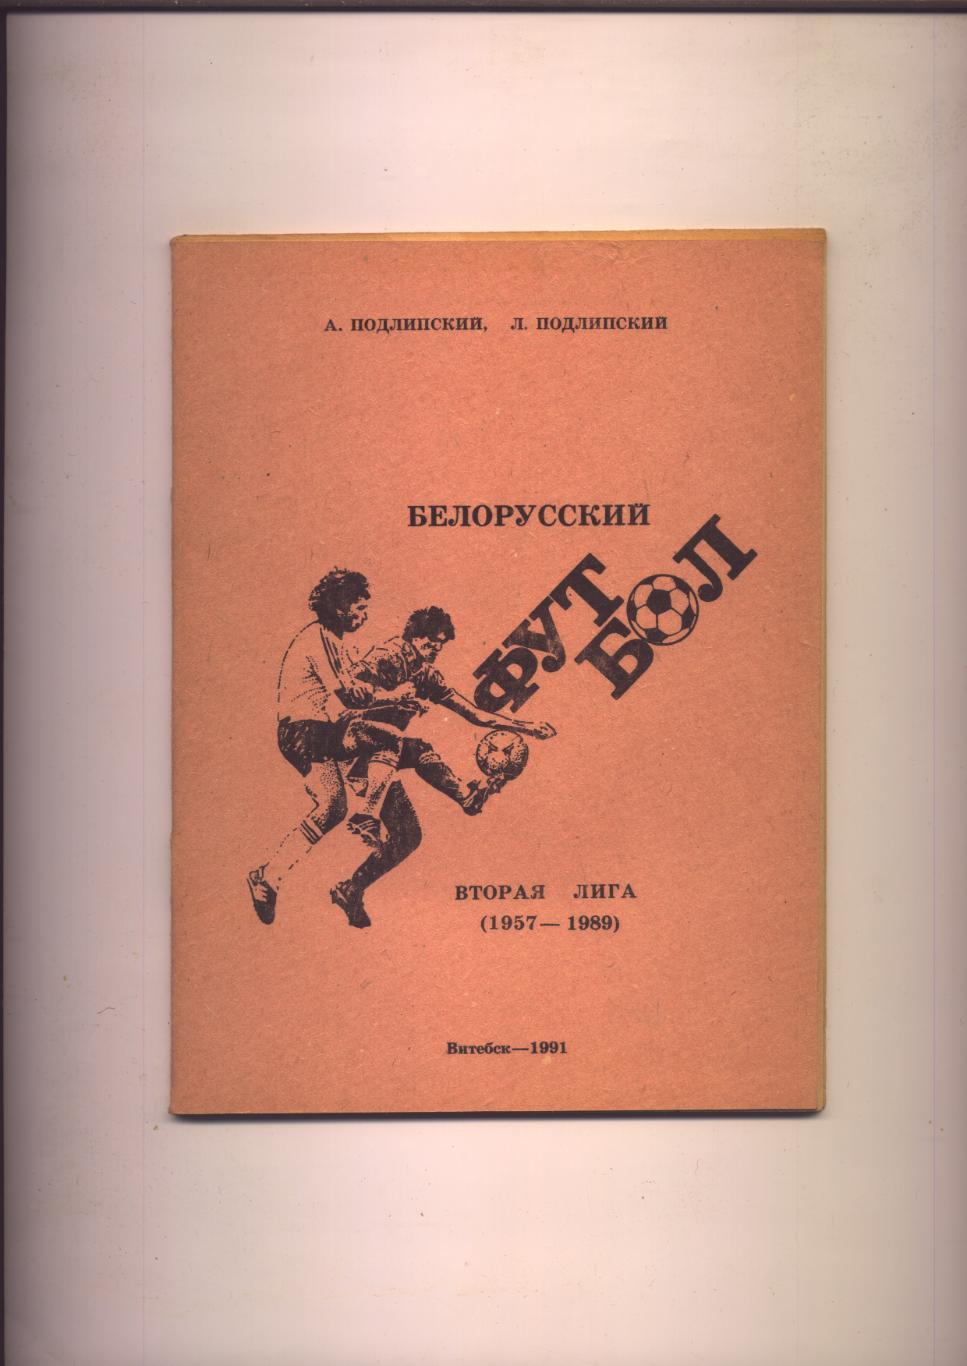 К/С Белорусский футбол 2-я лига История статистика фото 1957—1989 гг.